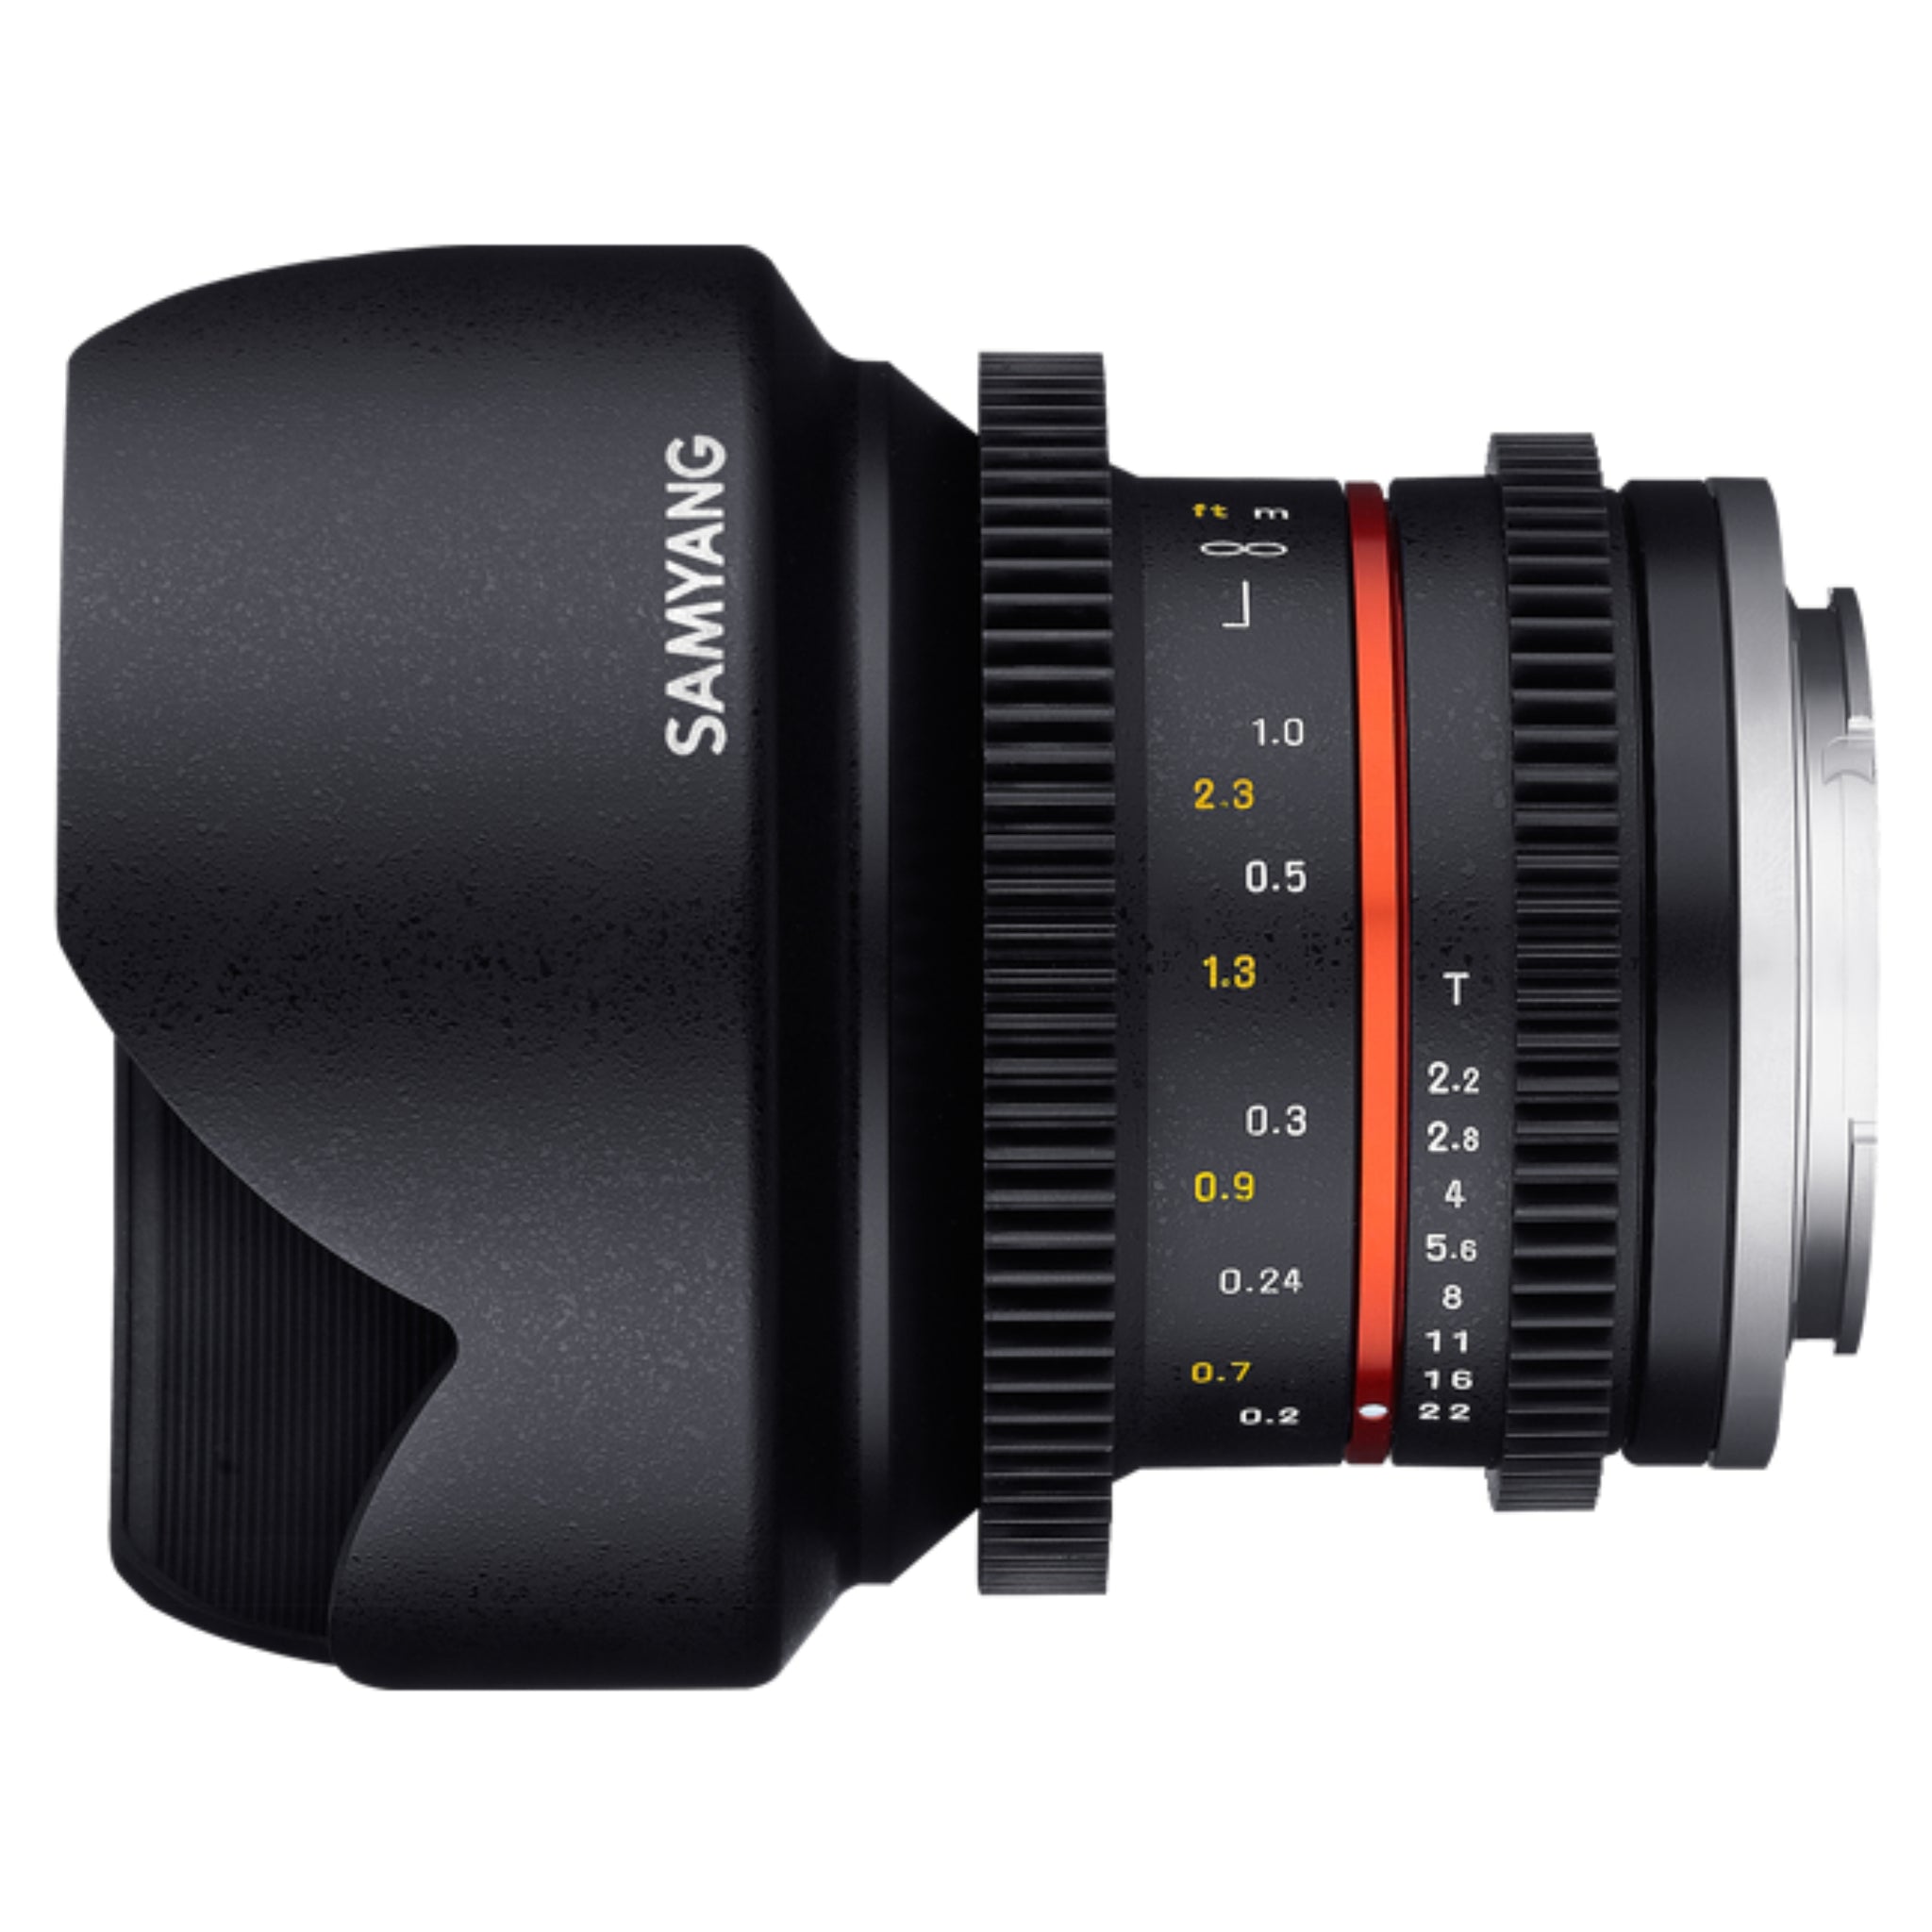 Samyang 12mm T2.2 Cine NCS CS-Camera Lenses-futuromic